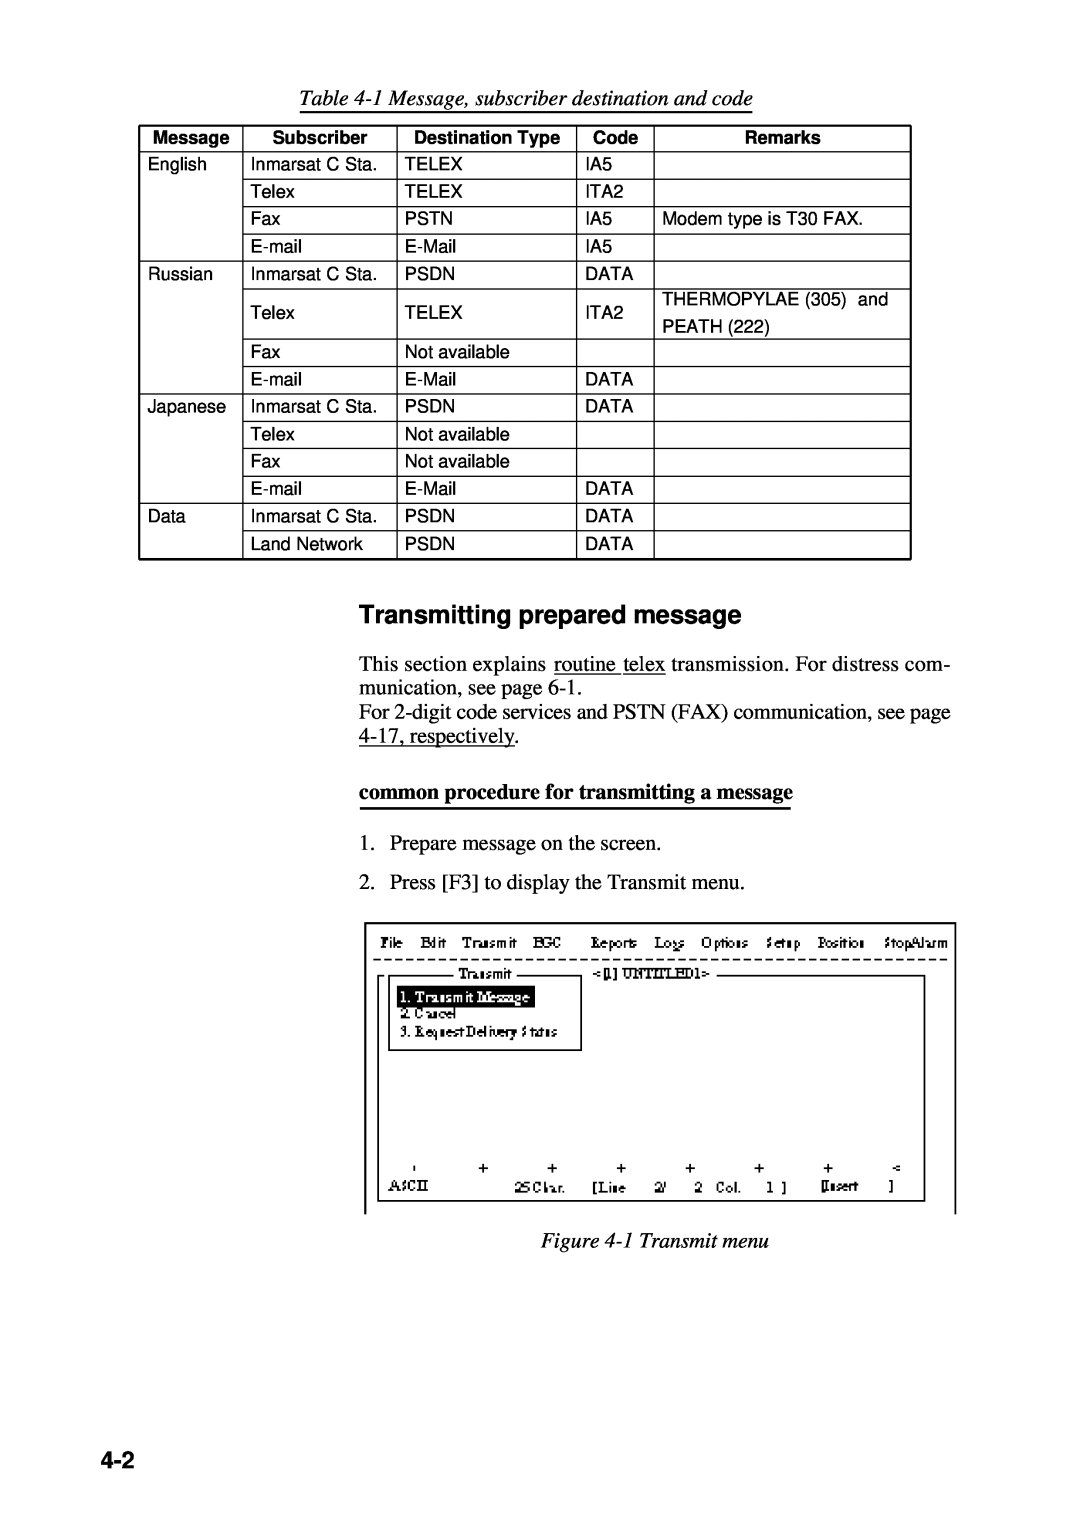 Furuno RC-1500-1T manual Transmitting prepared message, 1 Message, subscriber destination and code, 1 Transmit menu 